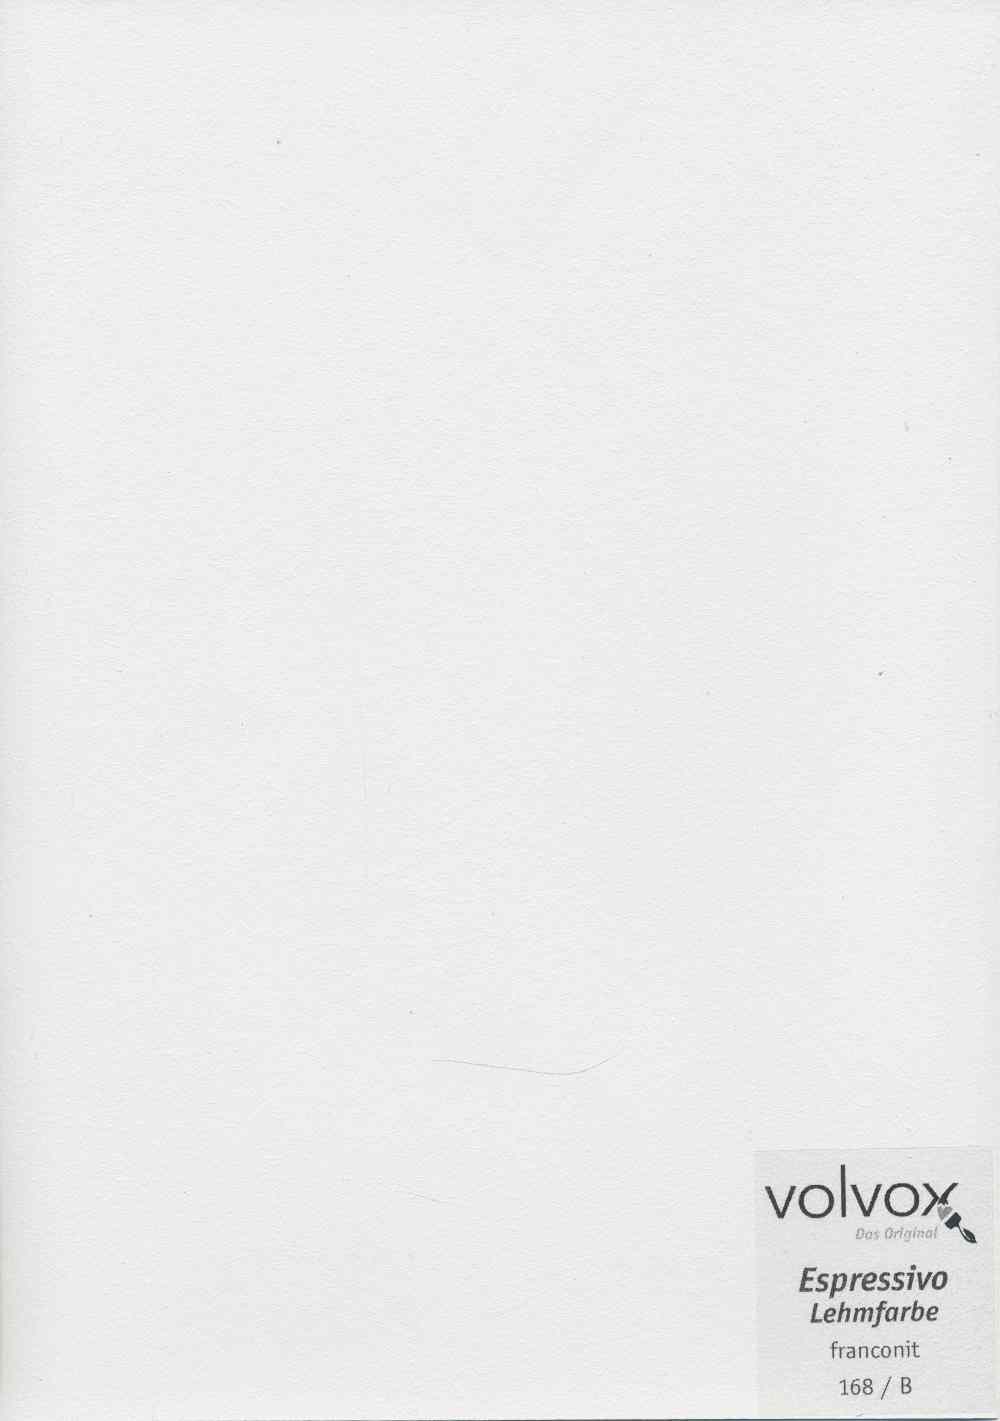 Volvox Espressivo Lehmfarbe 168 franconit · 0,9ltr.